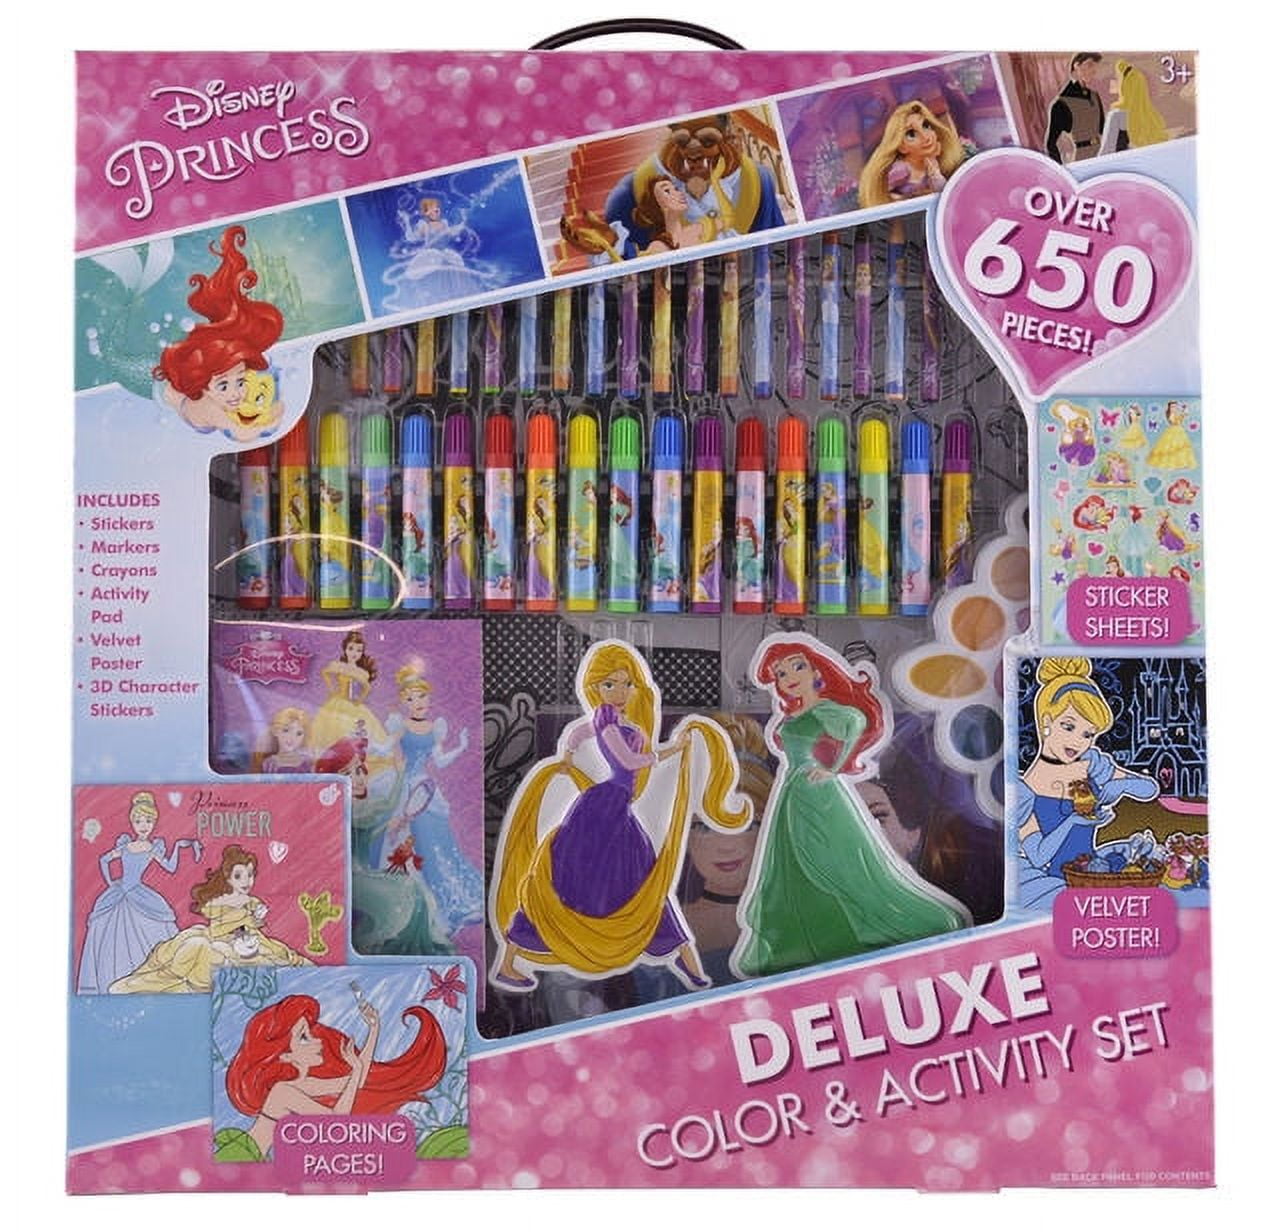 Disney Store Disney Princess Deluxe Art Kit